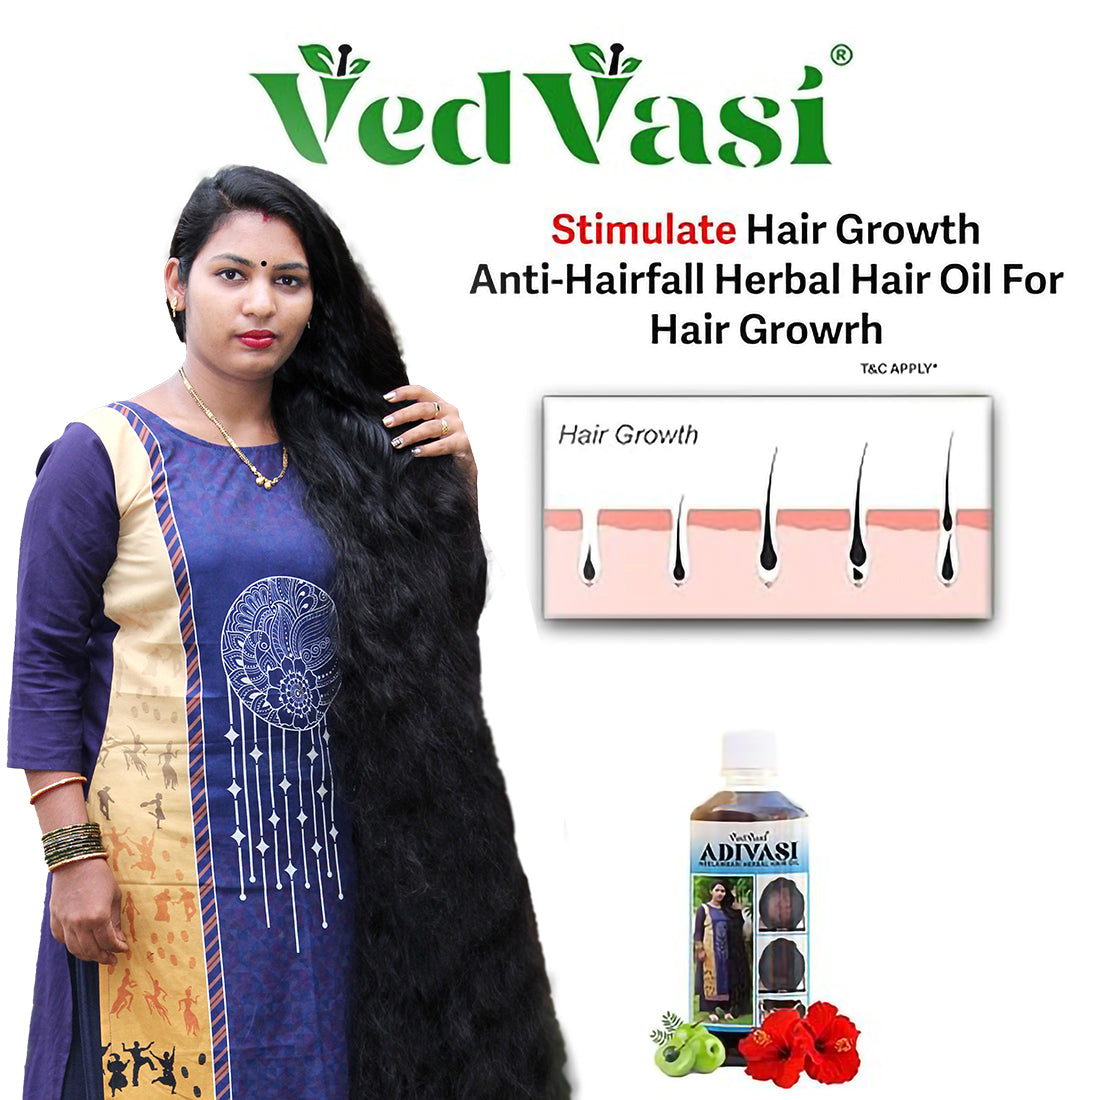 Adivasi Herbal Hair Oil | Get strong and long hair